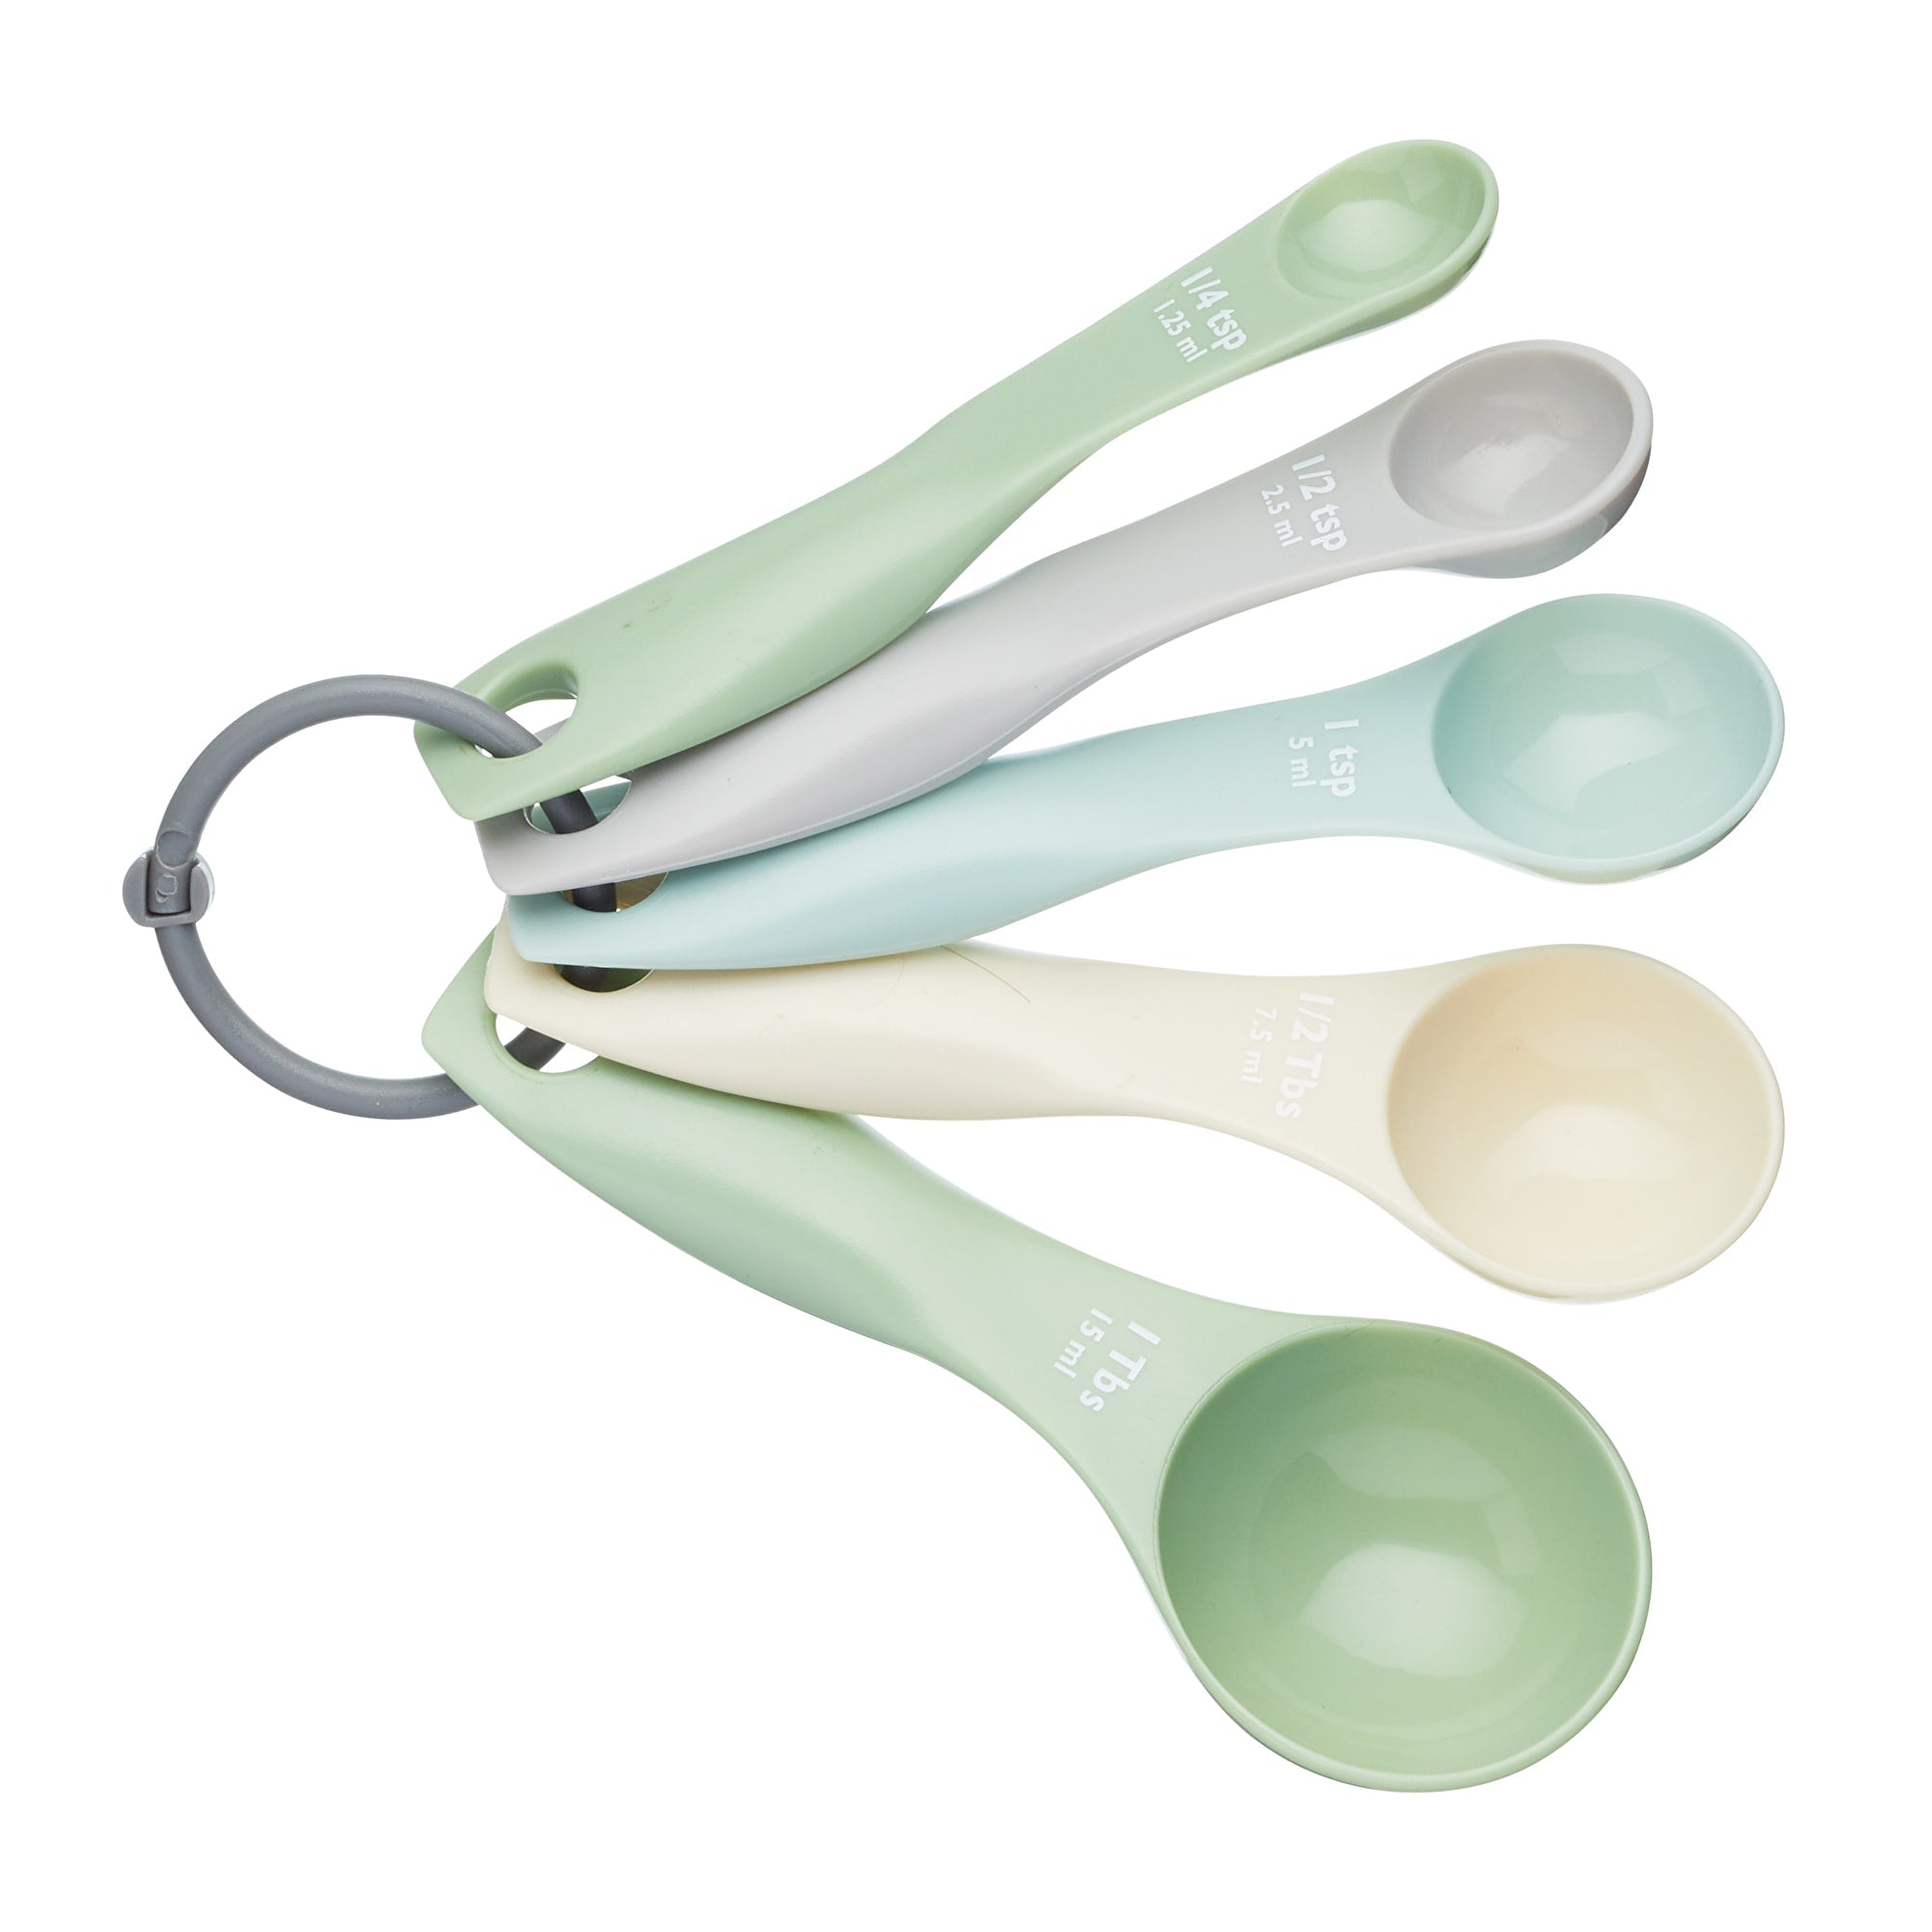 Colourworks Classics Five Piece Measuring Spoon Set - The Cooks Cupboard Ltd